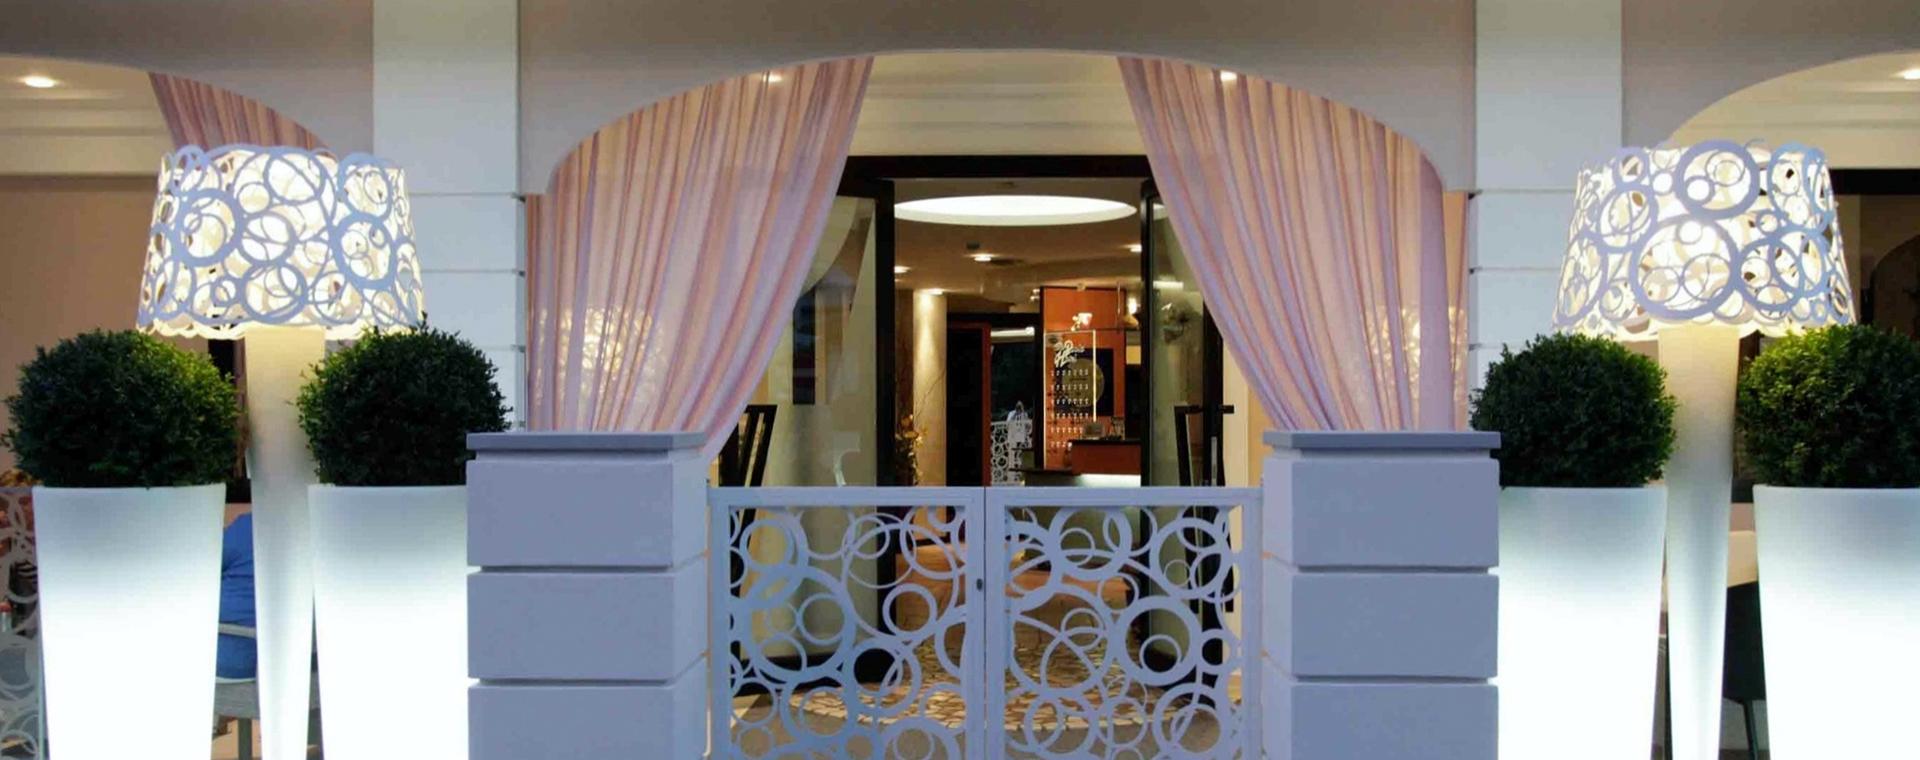 hotelvillapaola it 1-en-246282-offer-fair-ttg-sun-sia-2015 004